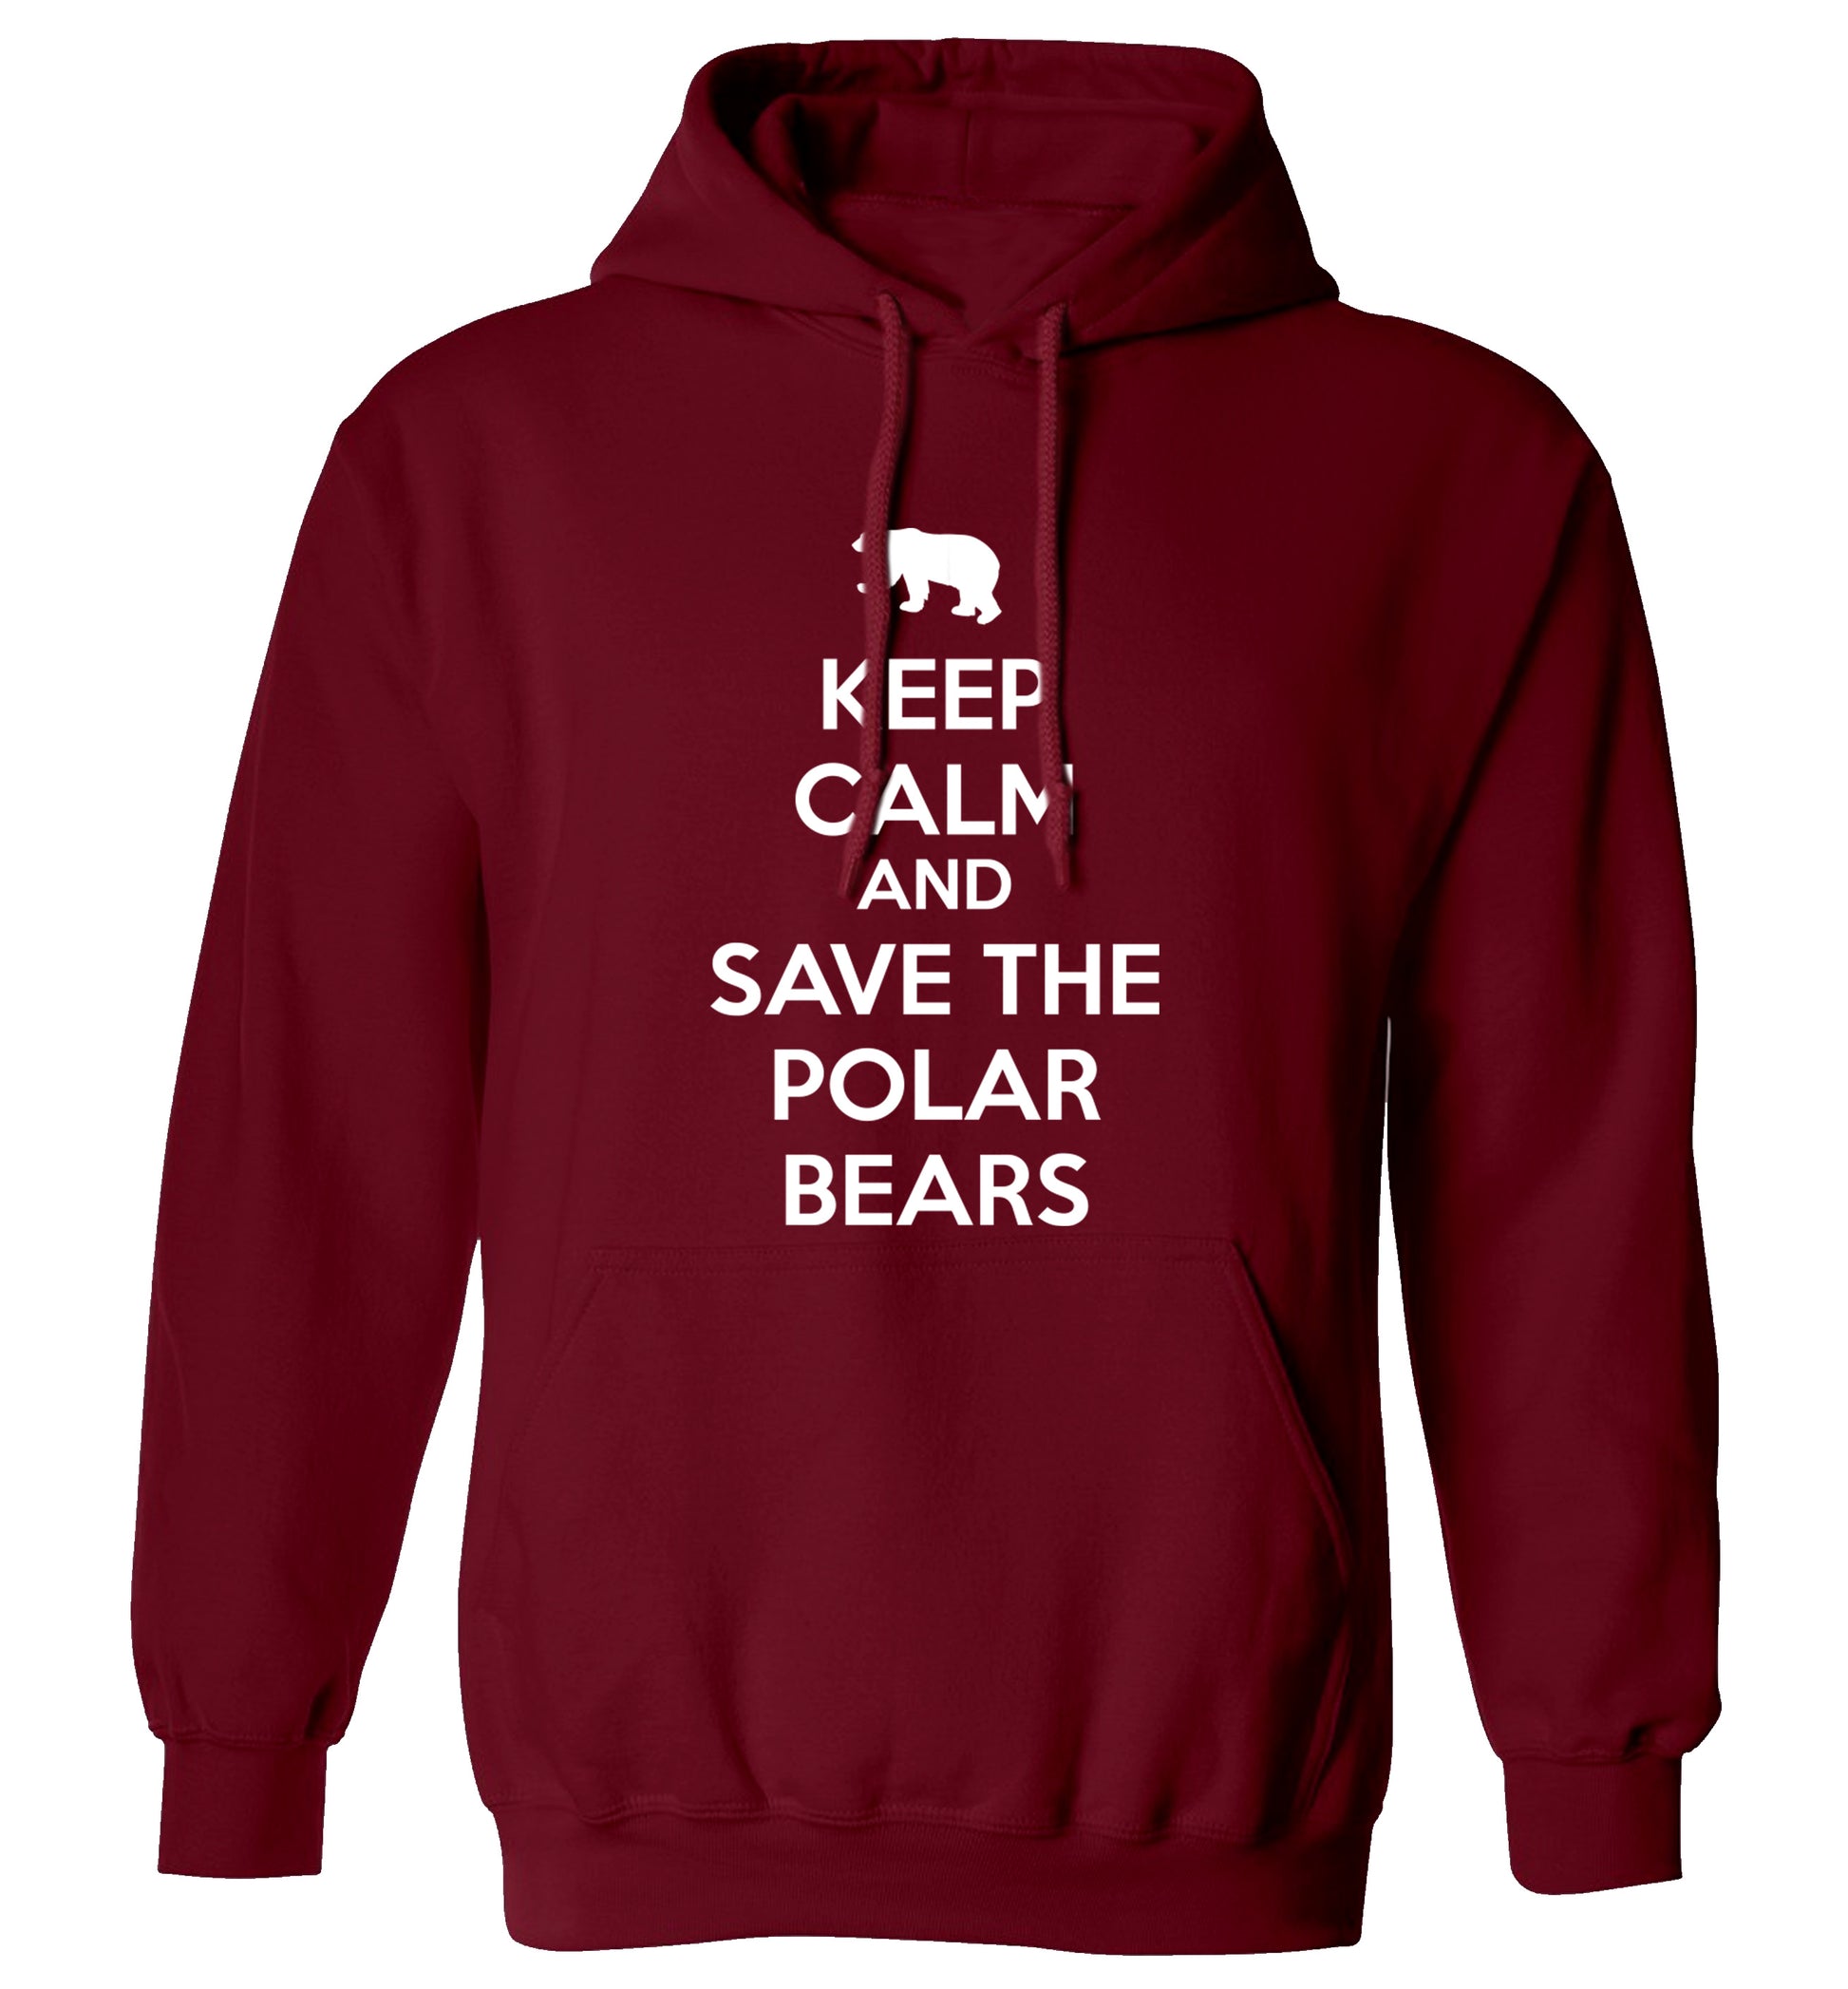 Keep calm and save the polar bears adults unisex maroon hoodie 2XL